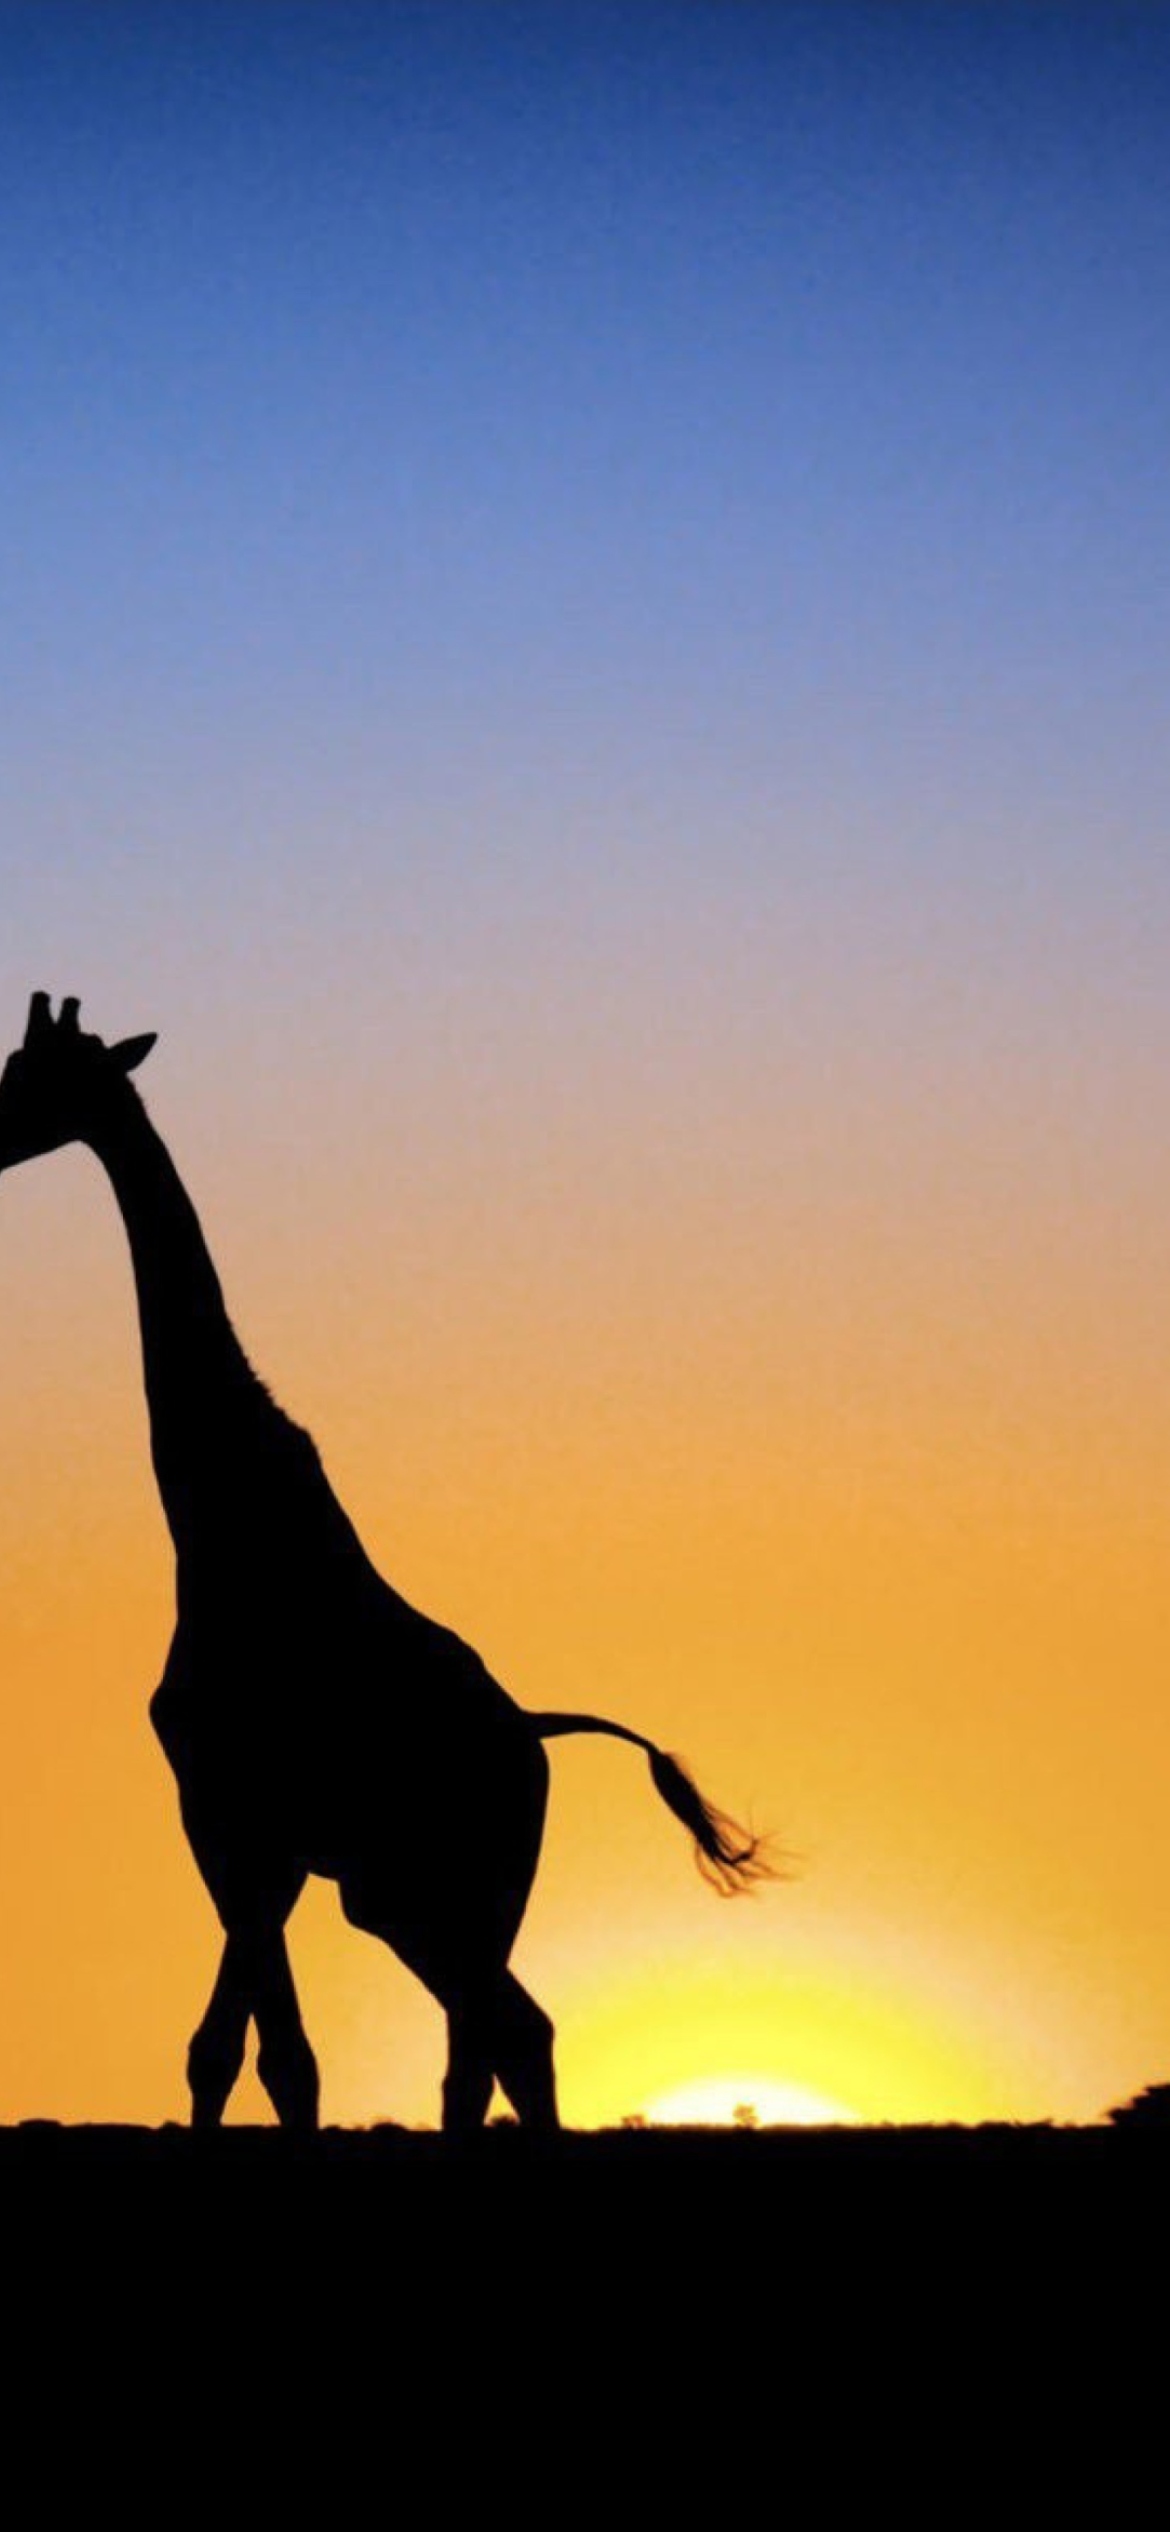 Обои Safari At Sunset - Giraffe's Silhouette 1170x2532